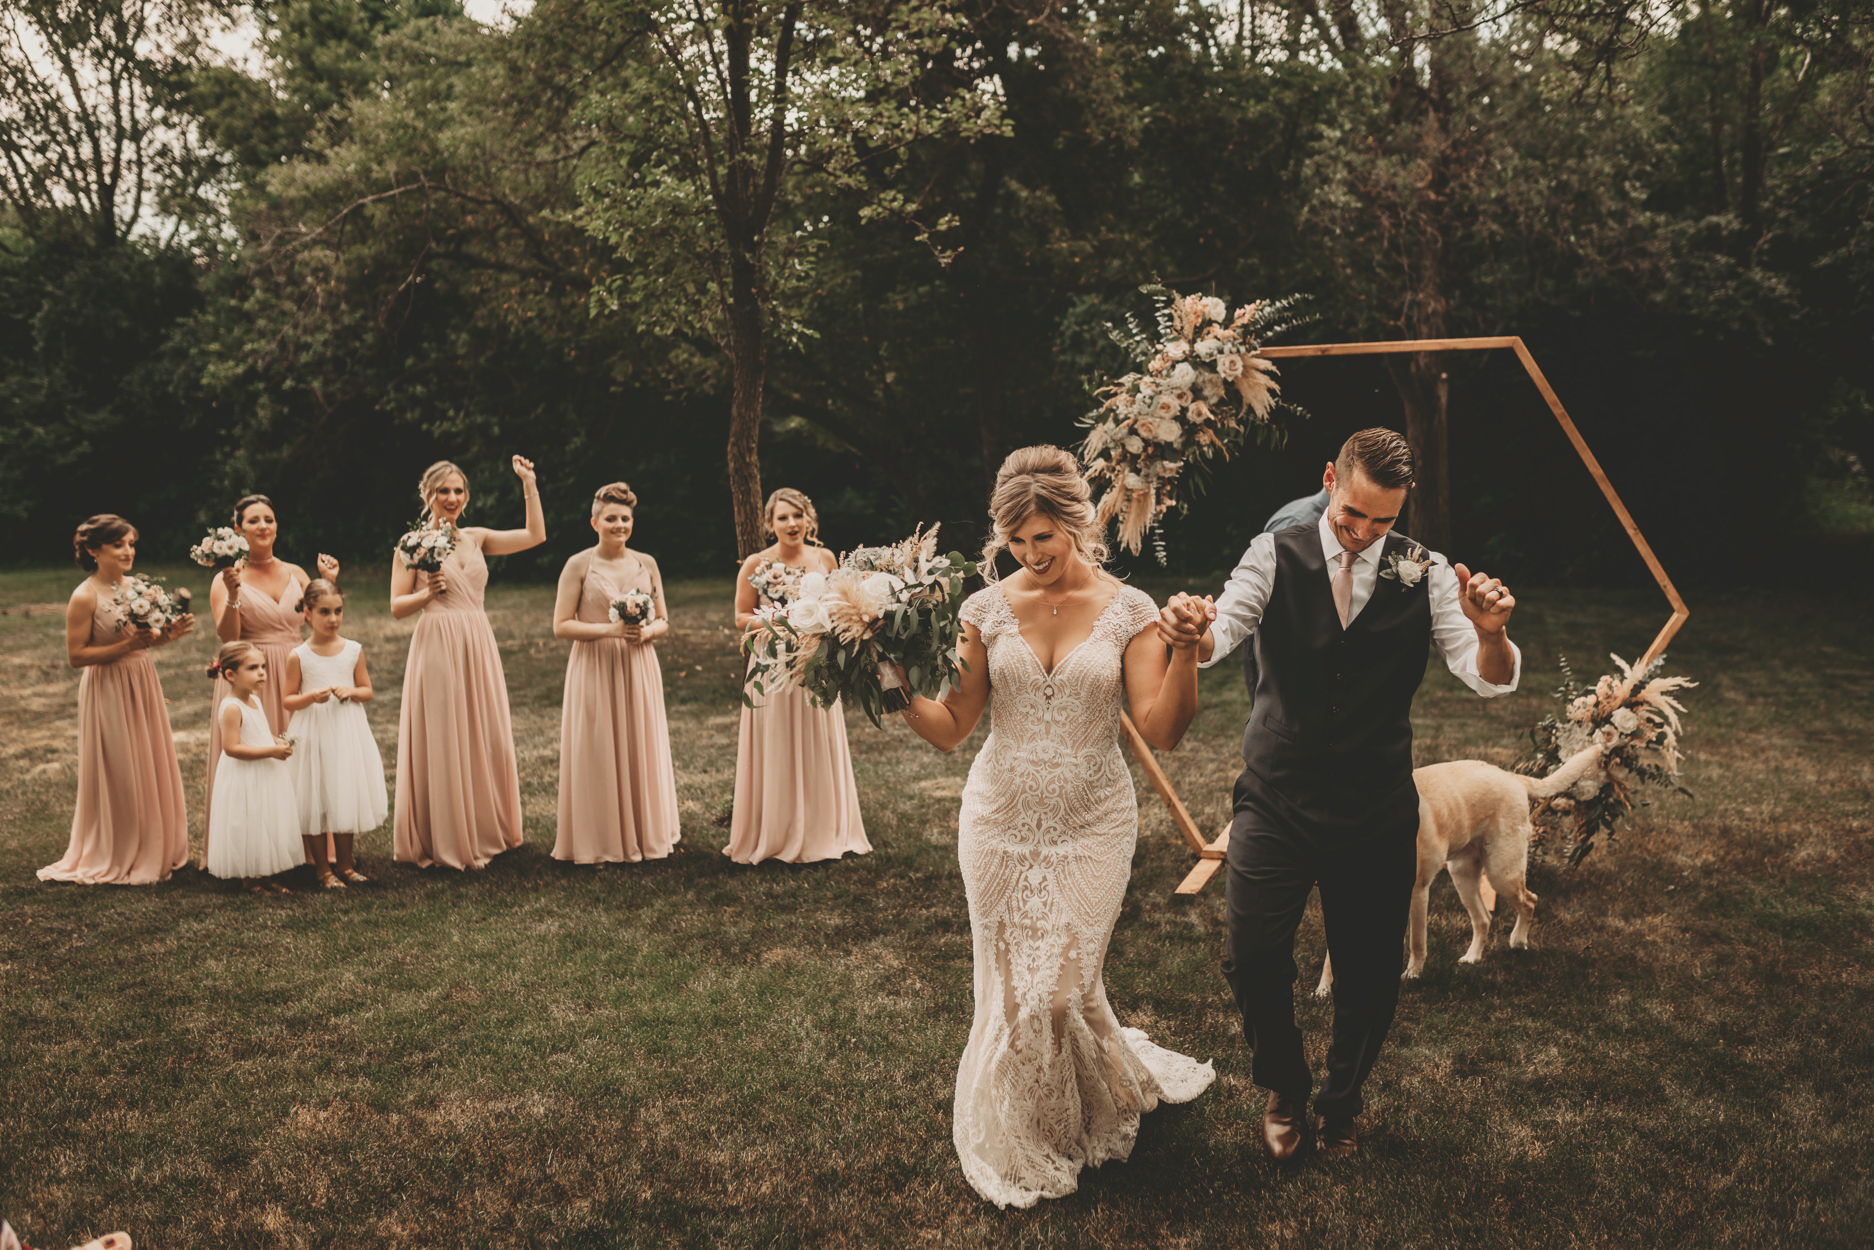 A Gorgeous DIY Backyard Wedding Kayla Renee Photography Something Blue Weddings